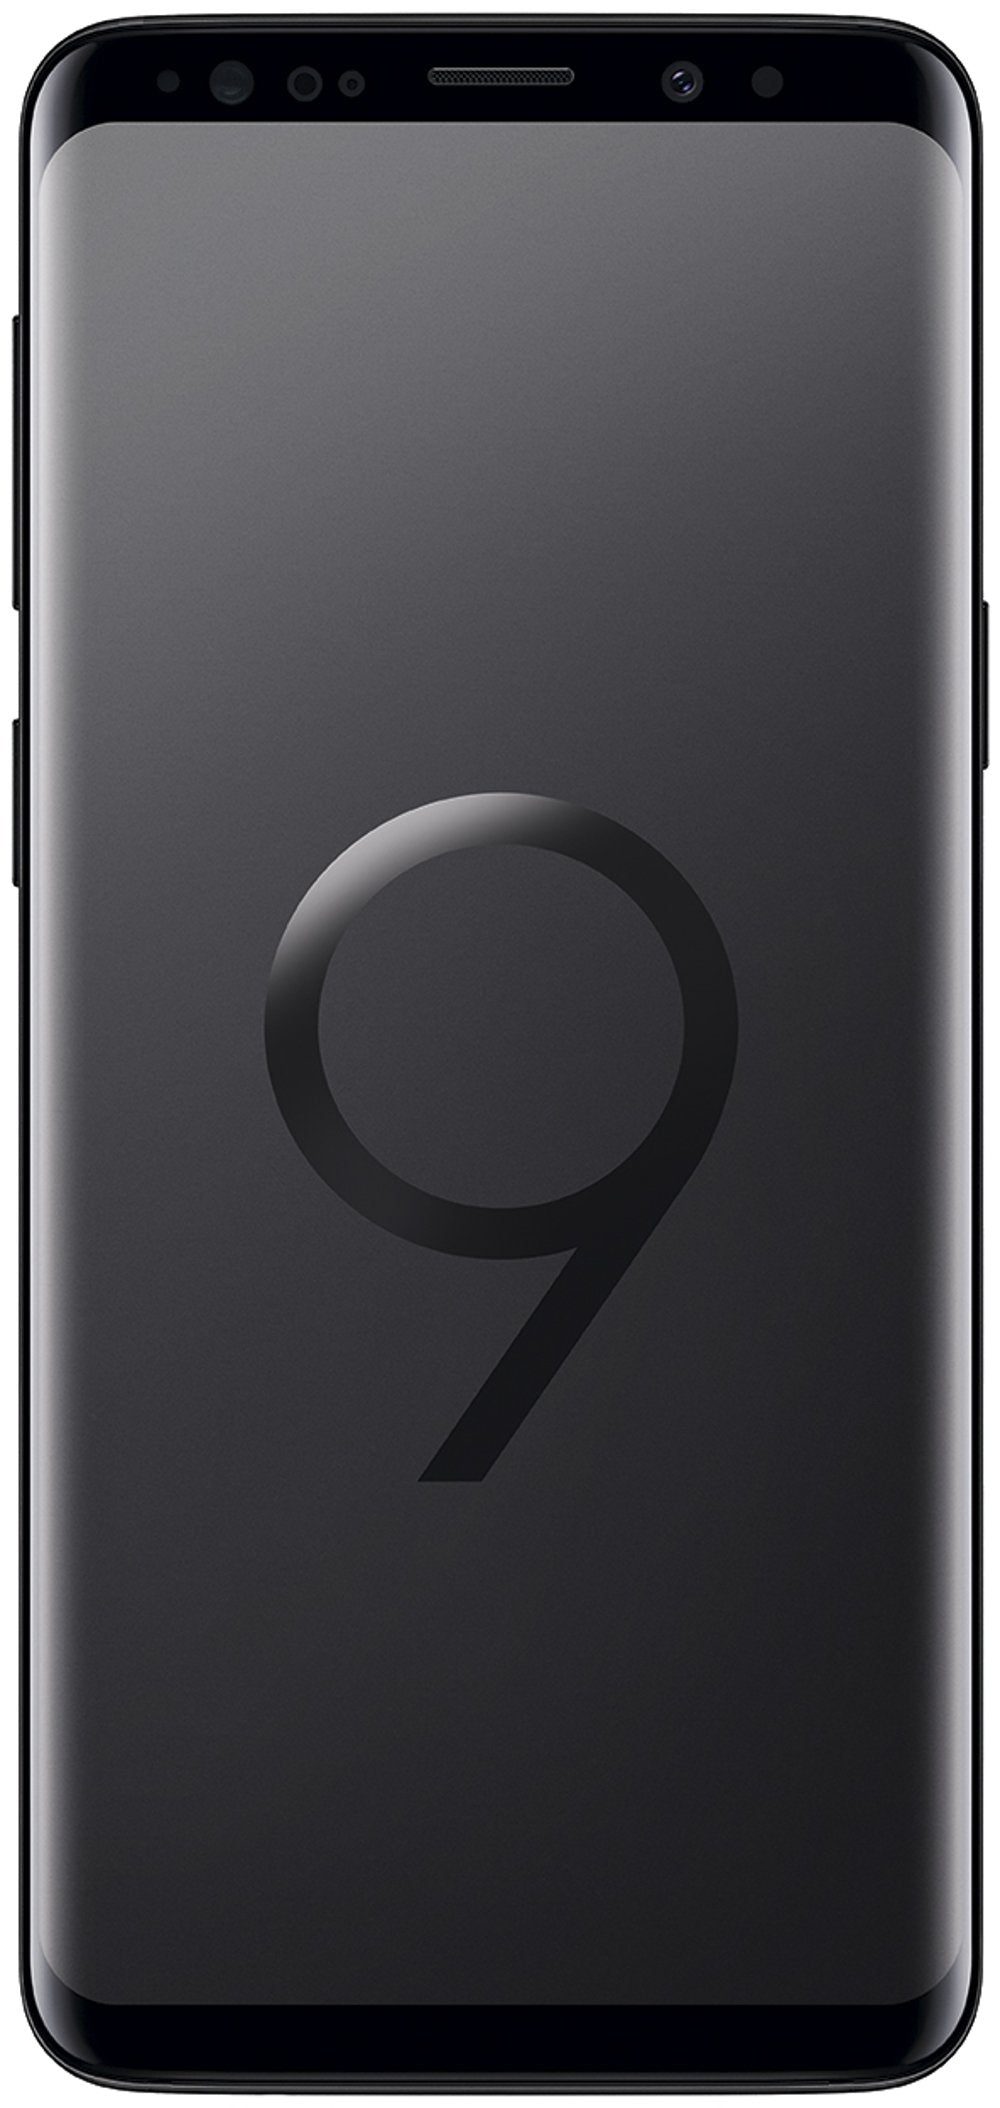 Samsung Smartphone Galaxy S9 (Single Sim) 64GB UK Version - Midnight Black